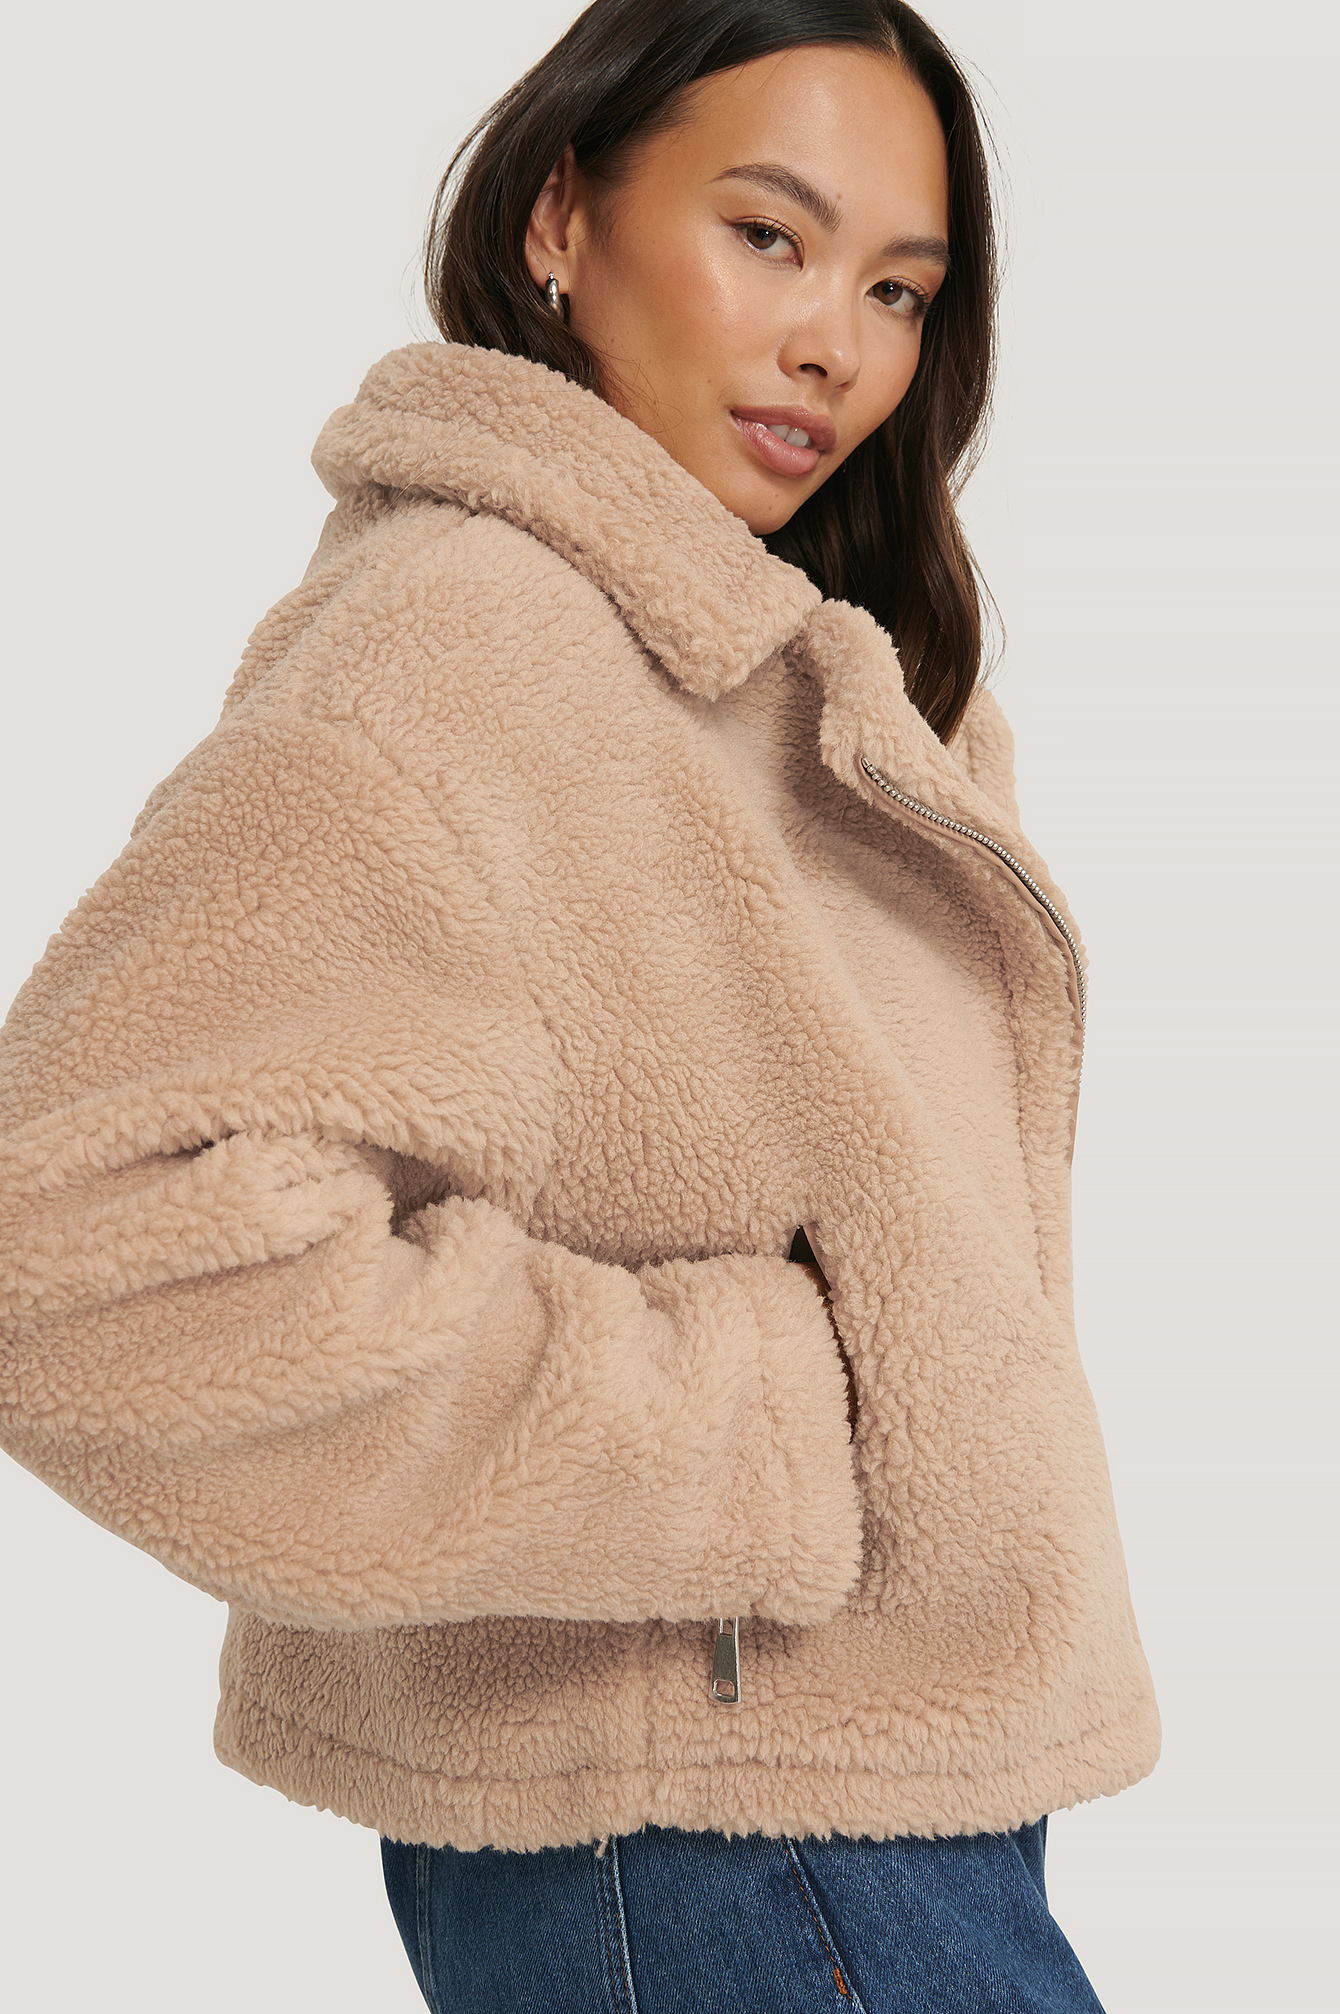 TIFENNY Plush Cardigan for Womens Winter Fluffy Coat Fleece Fur Jacket Outerwear Hoodies Wrap Tops 